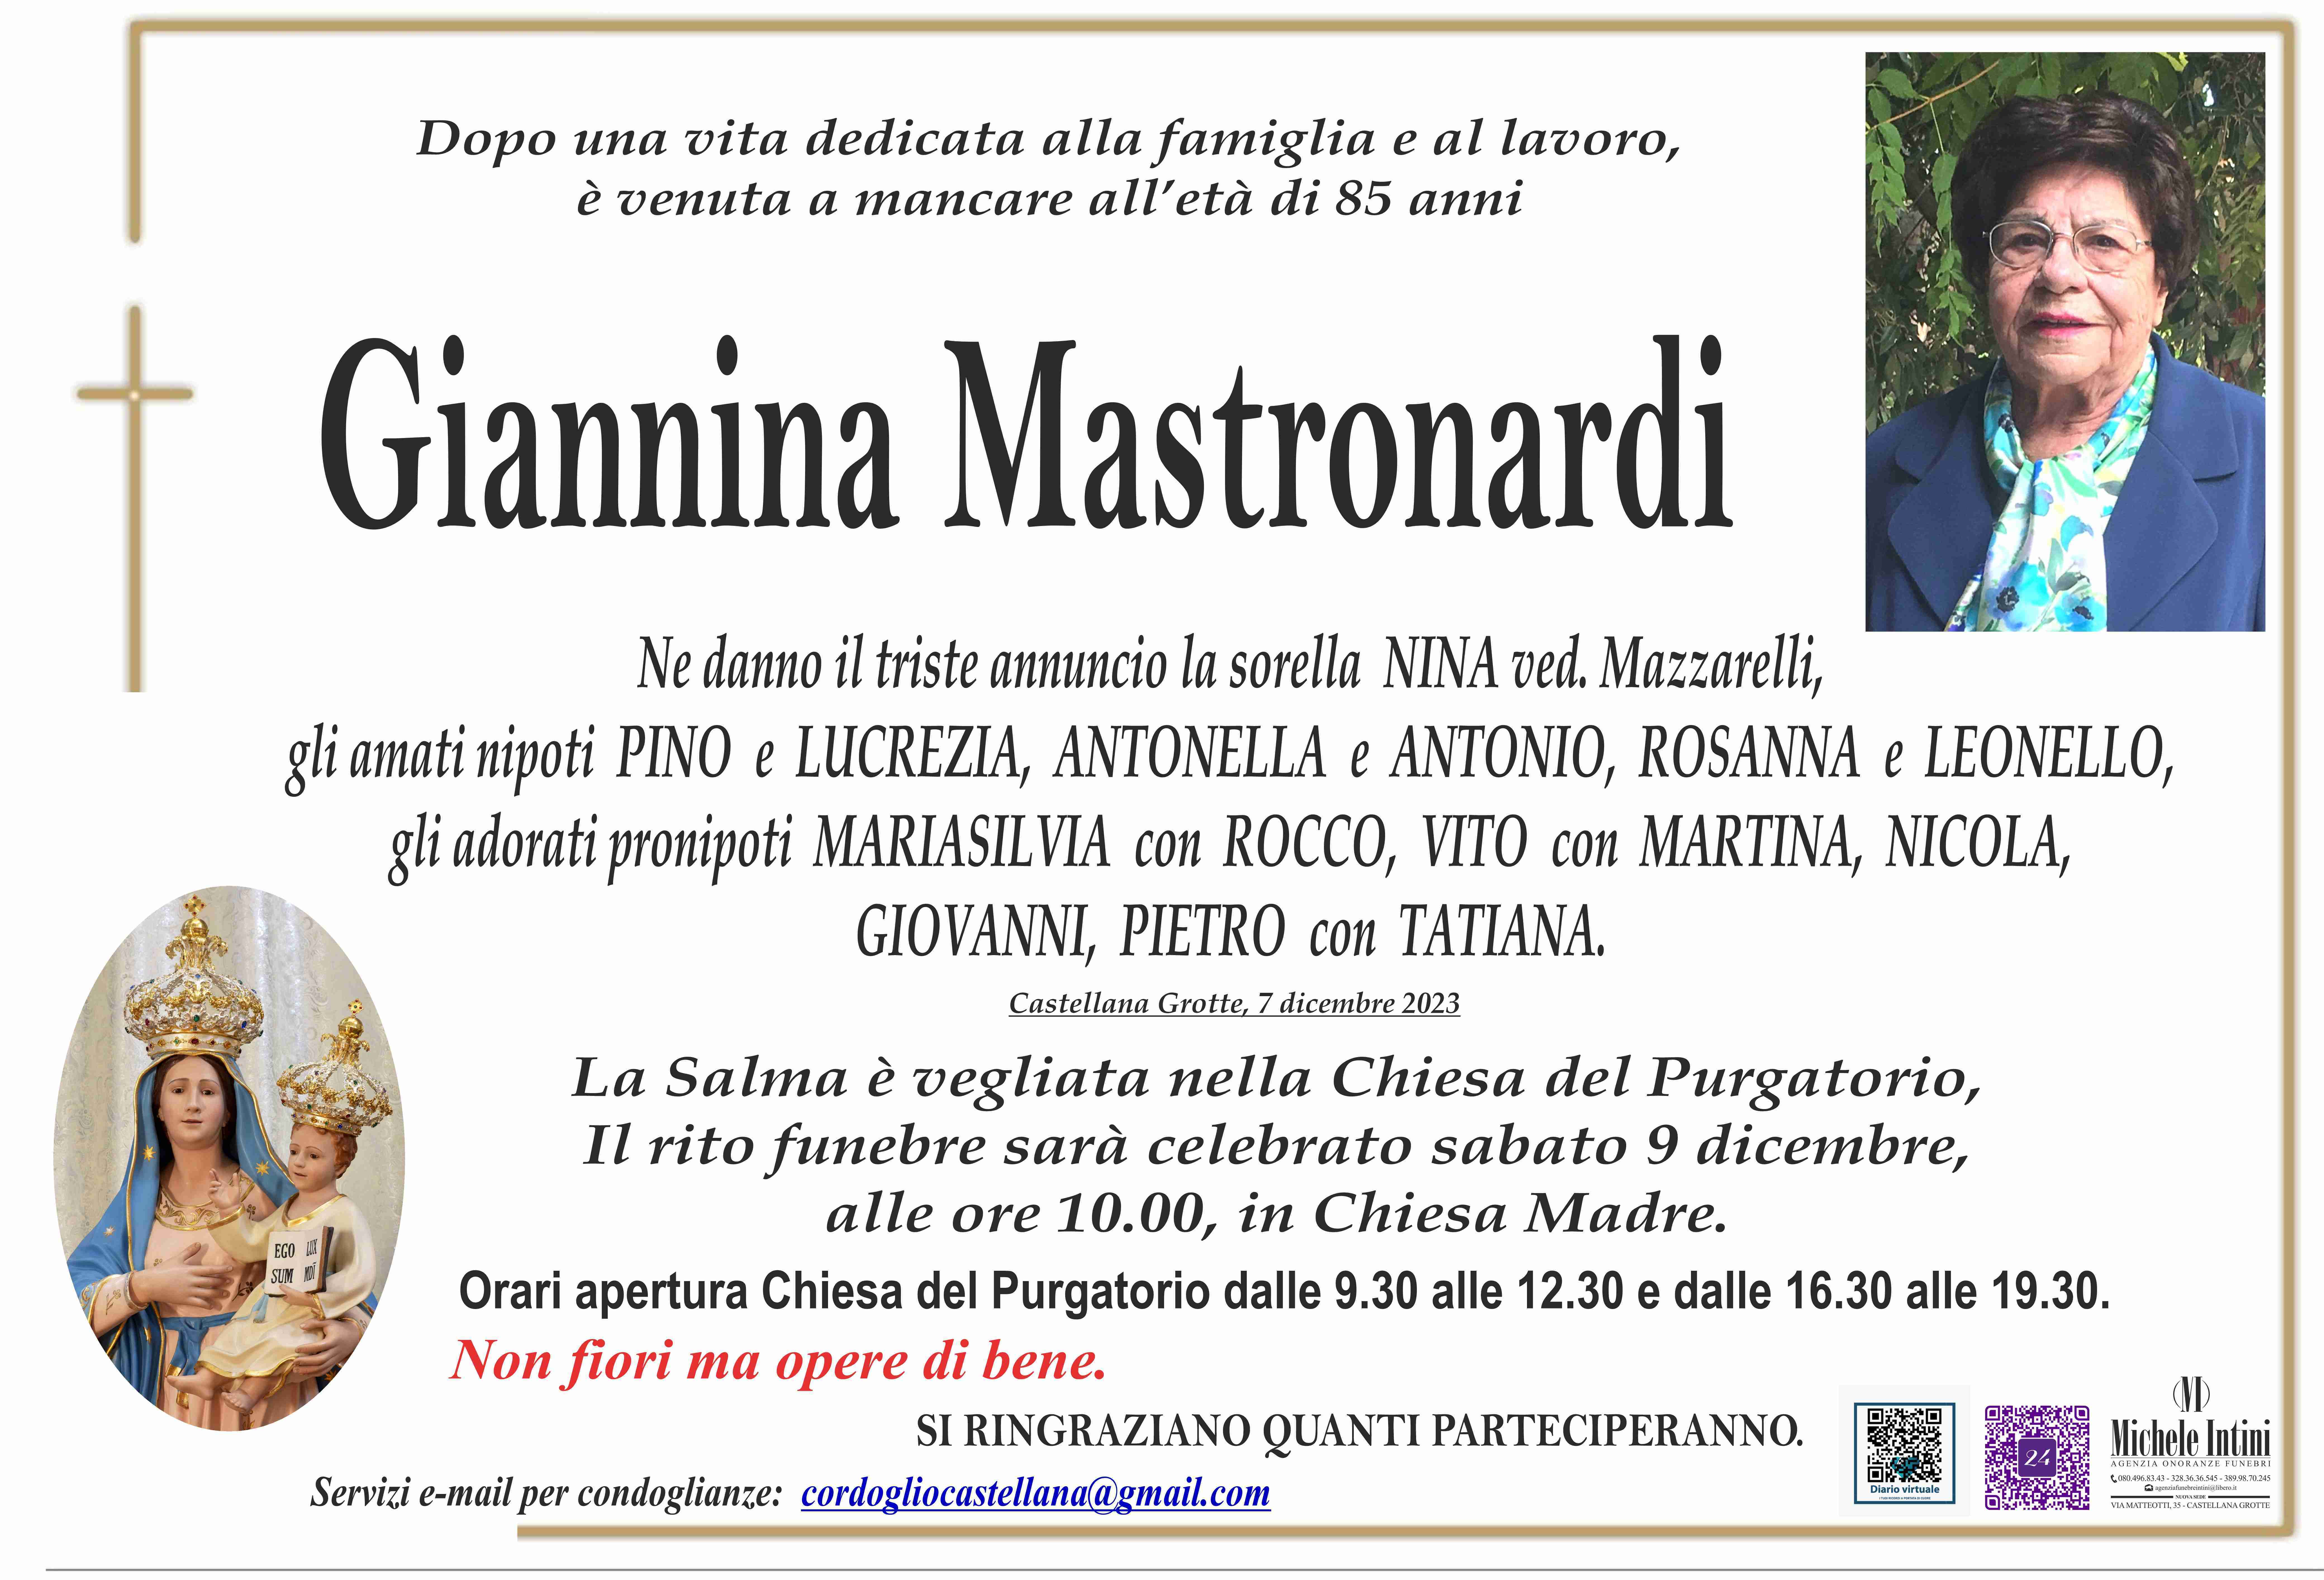 Giannina Mastronardi